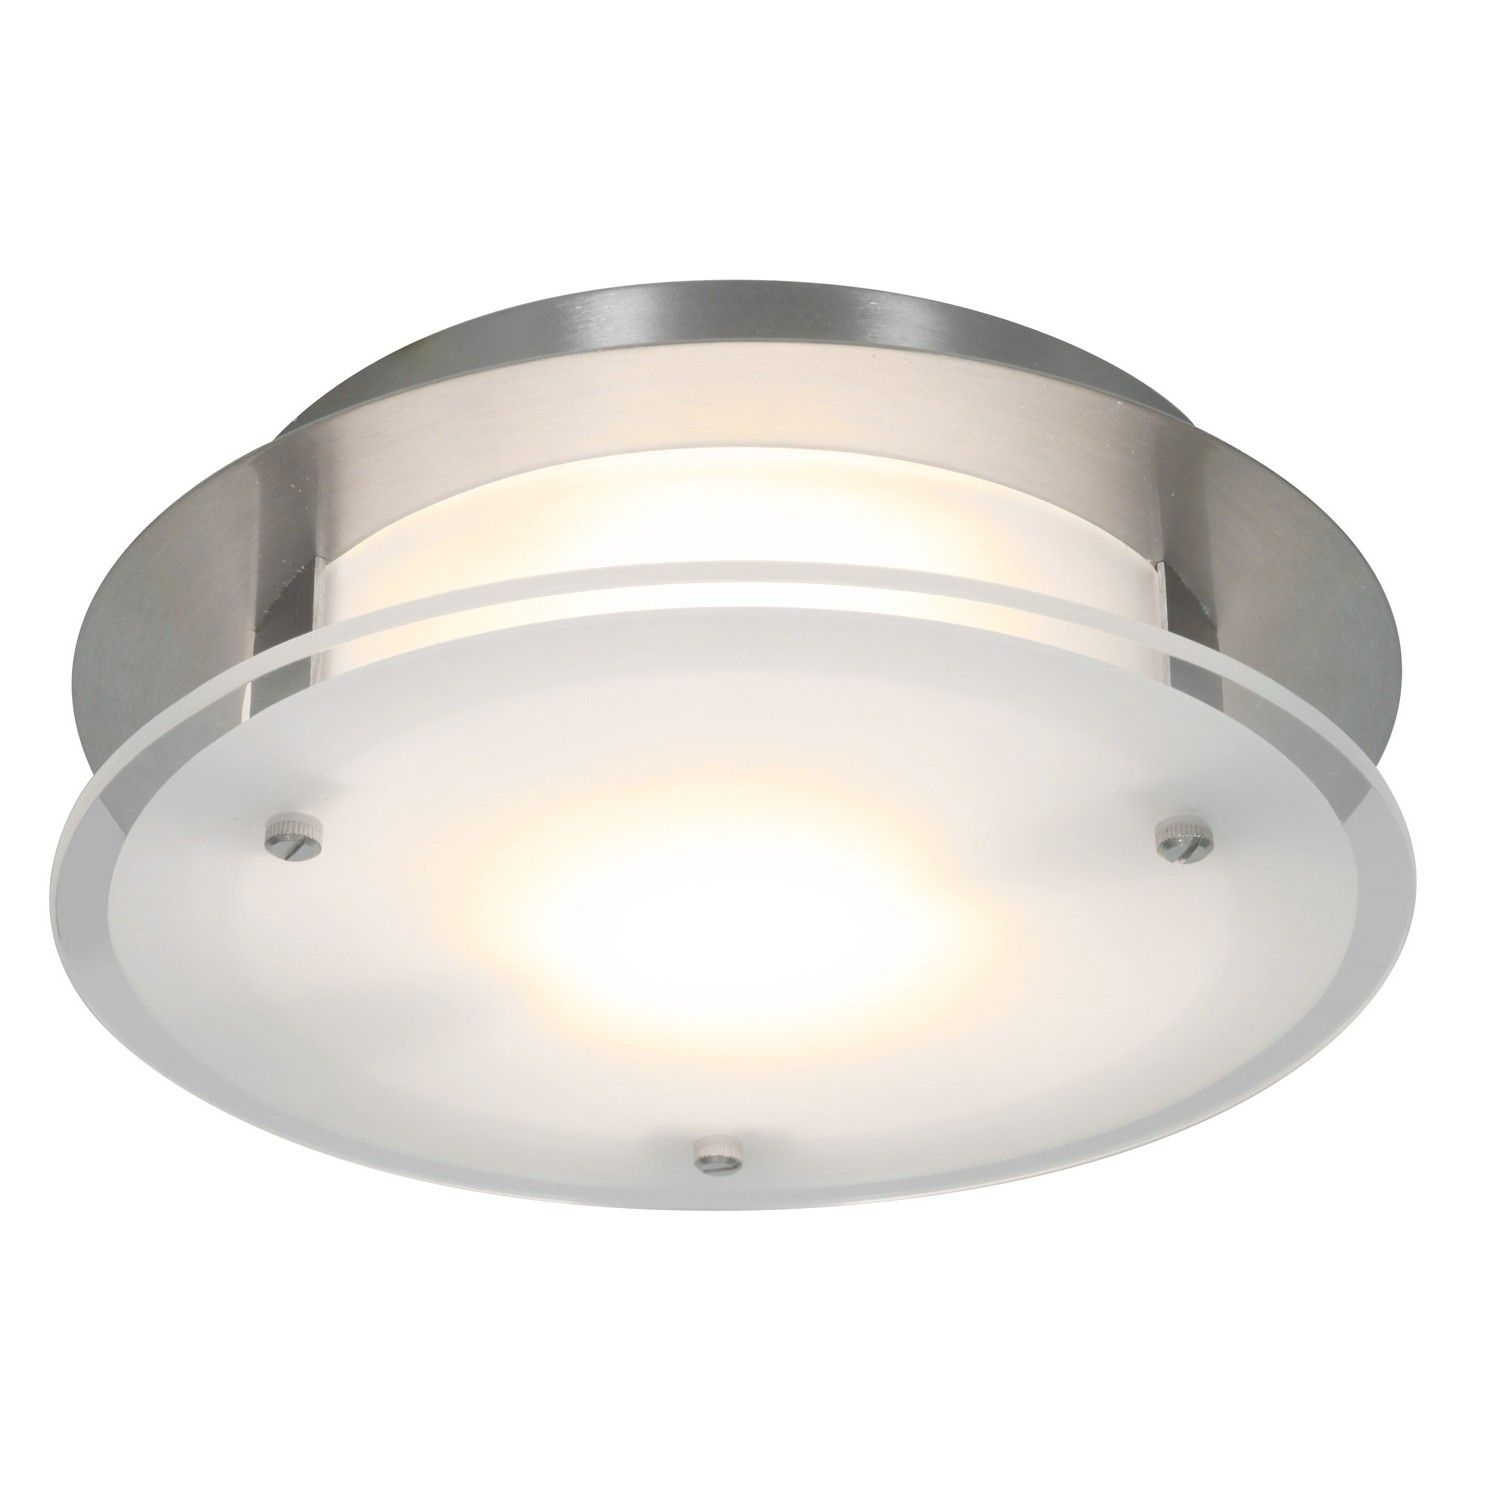 Luxury Ductless Bathroom Fan With Light Bathroom Fan Light for dimensions 1500 X 1500